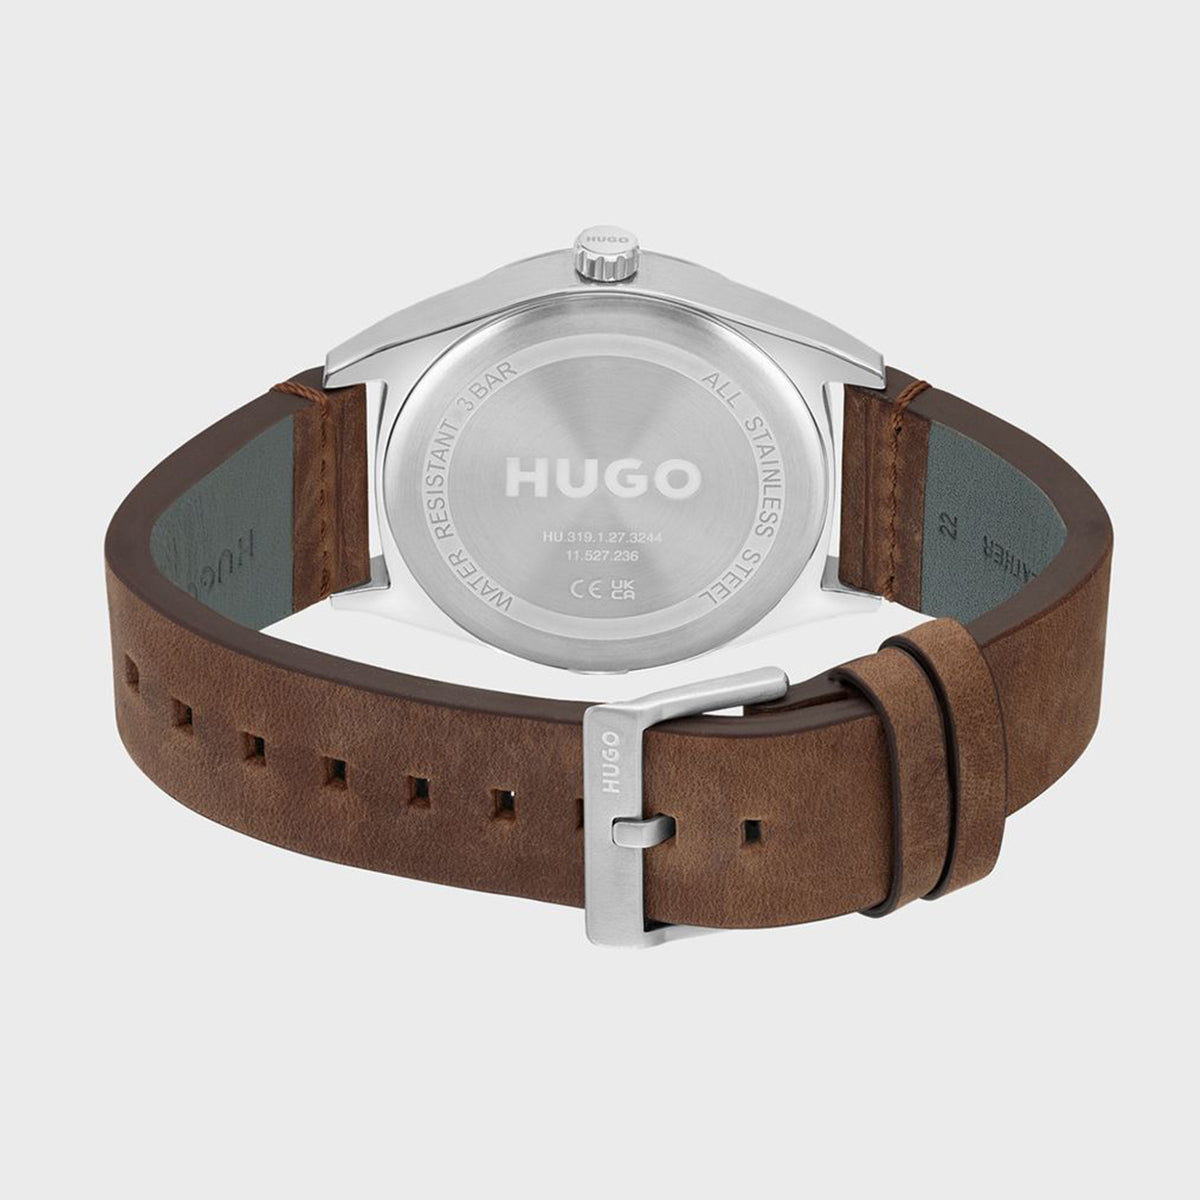 Hugo Boss - Casual - HB153.0249